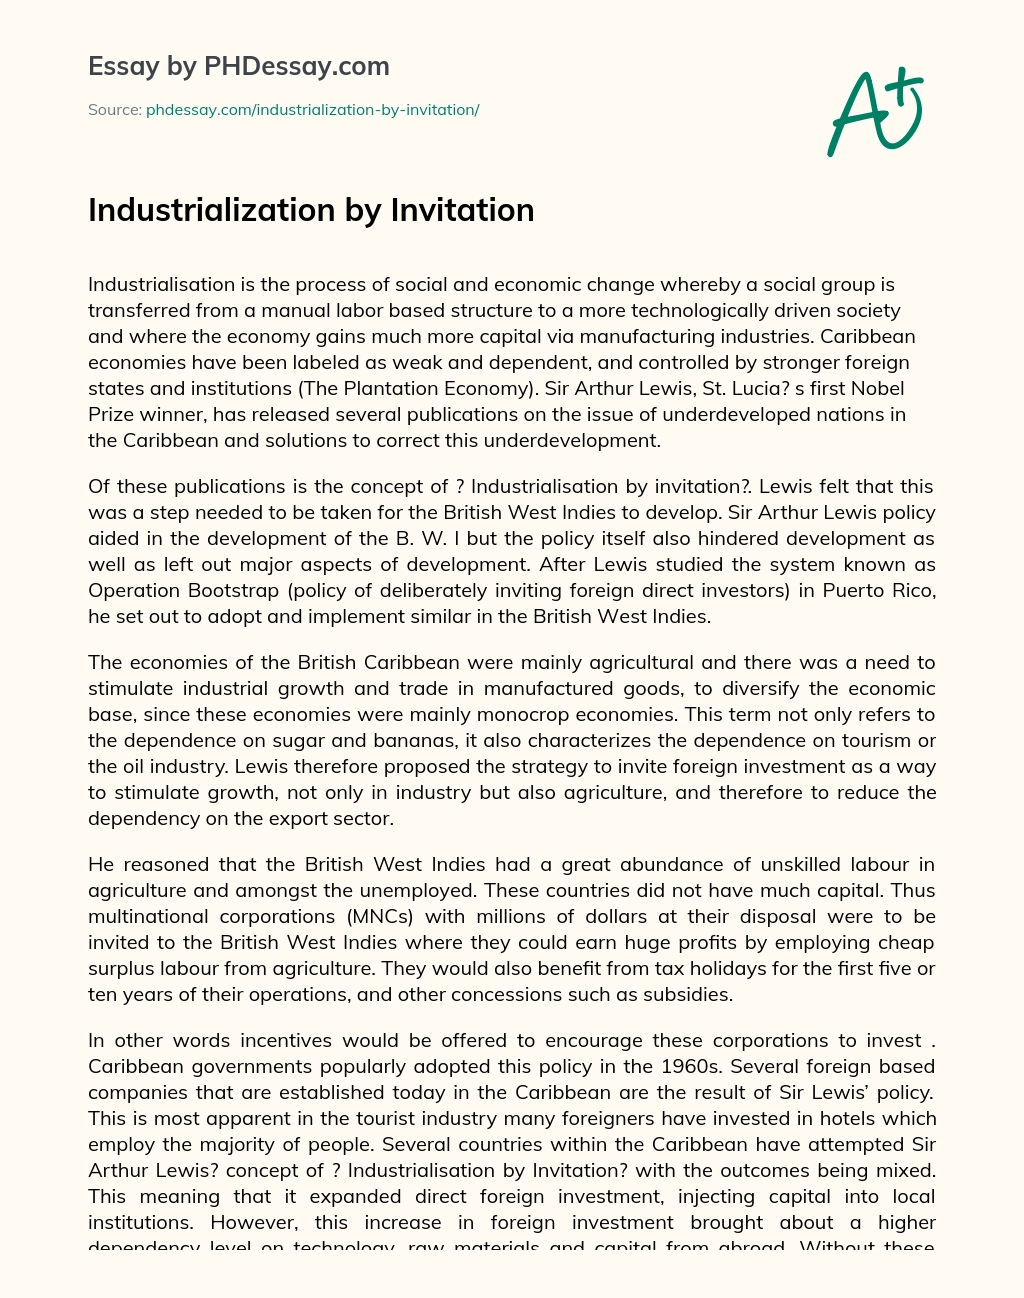 Industrialization by Invitation essay